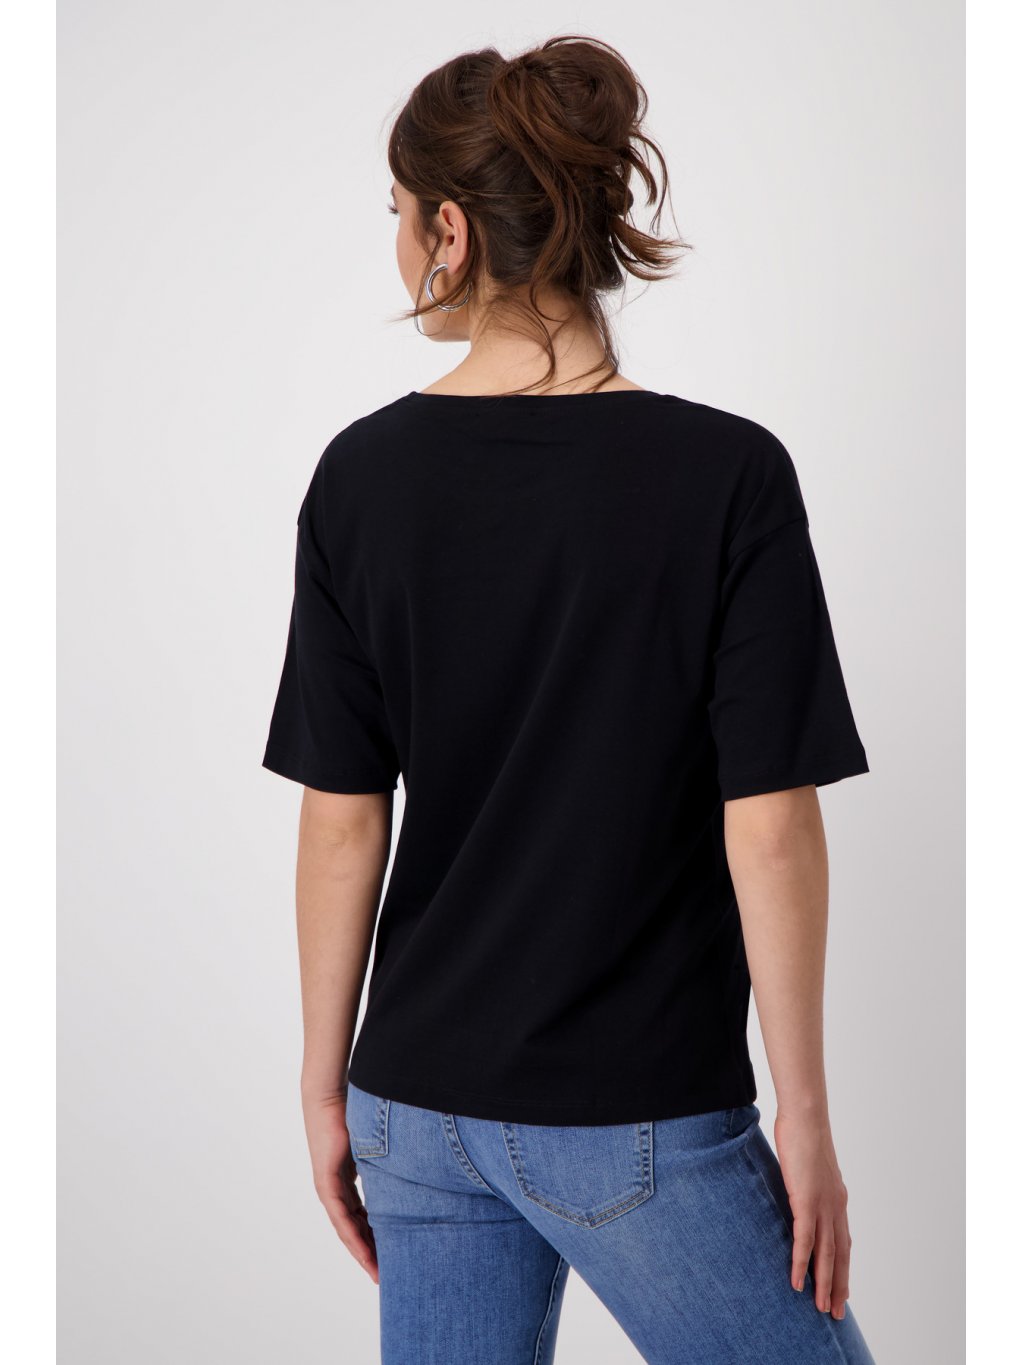 Tričko Monari 8351 černé s krátkým rukávem